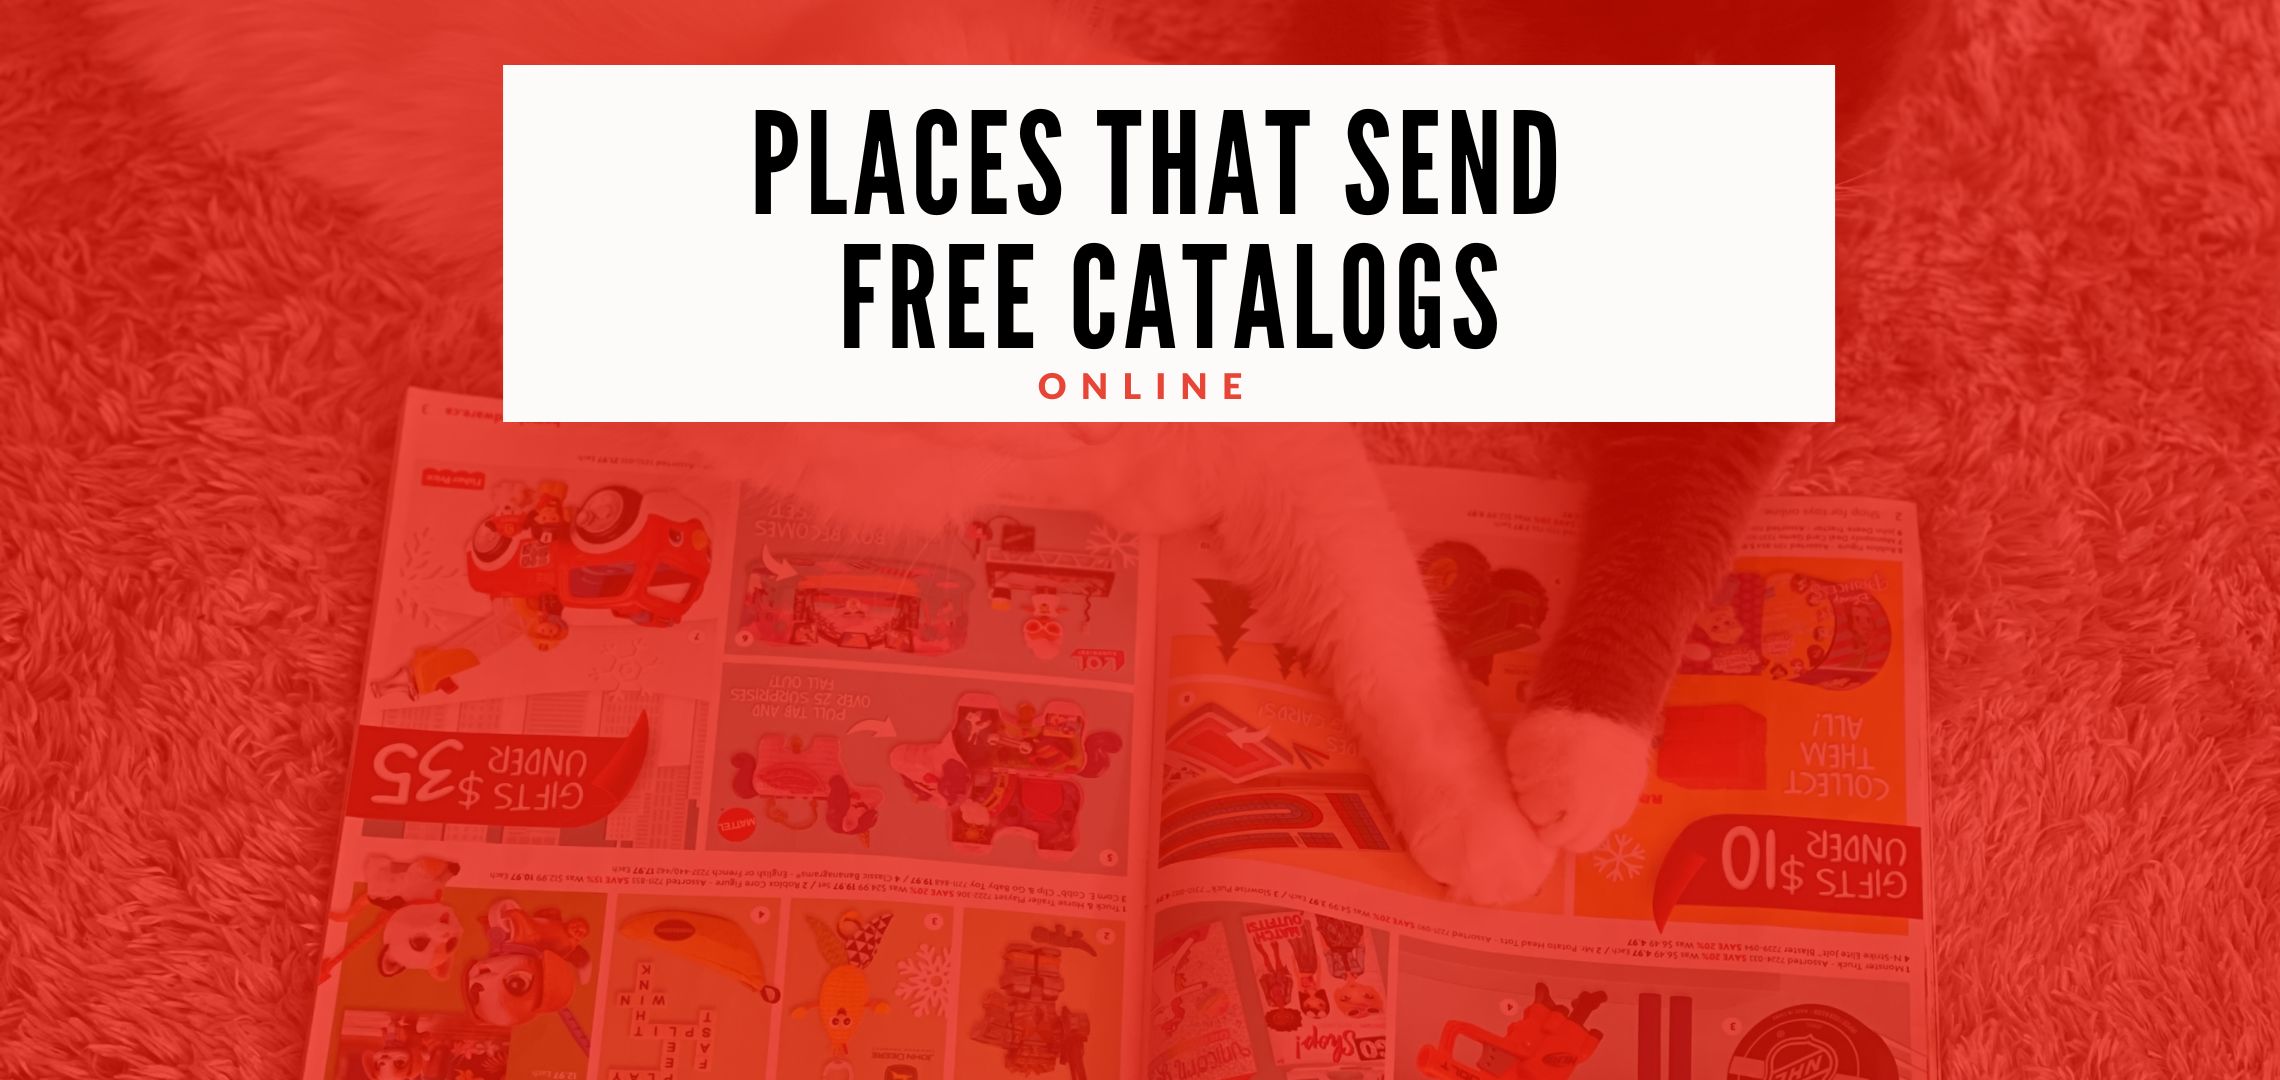 Access free catalogs